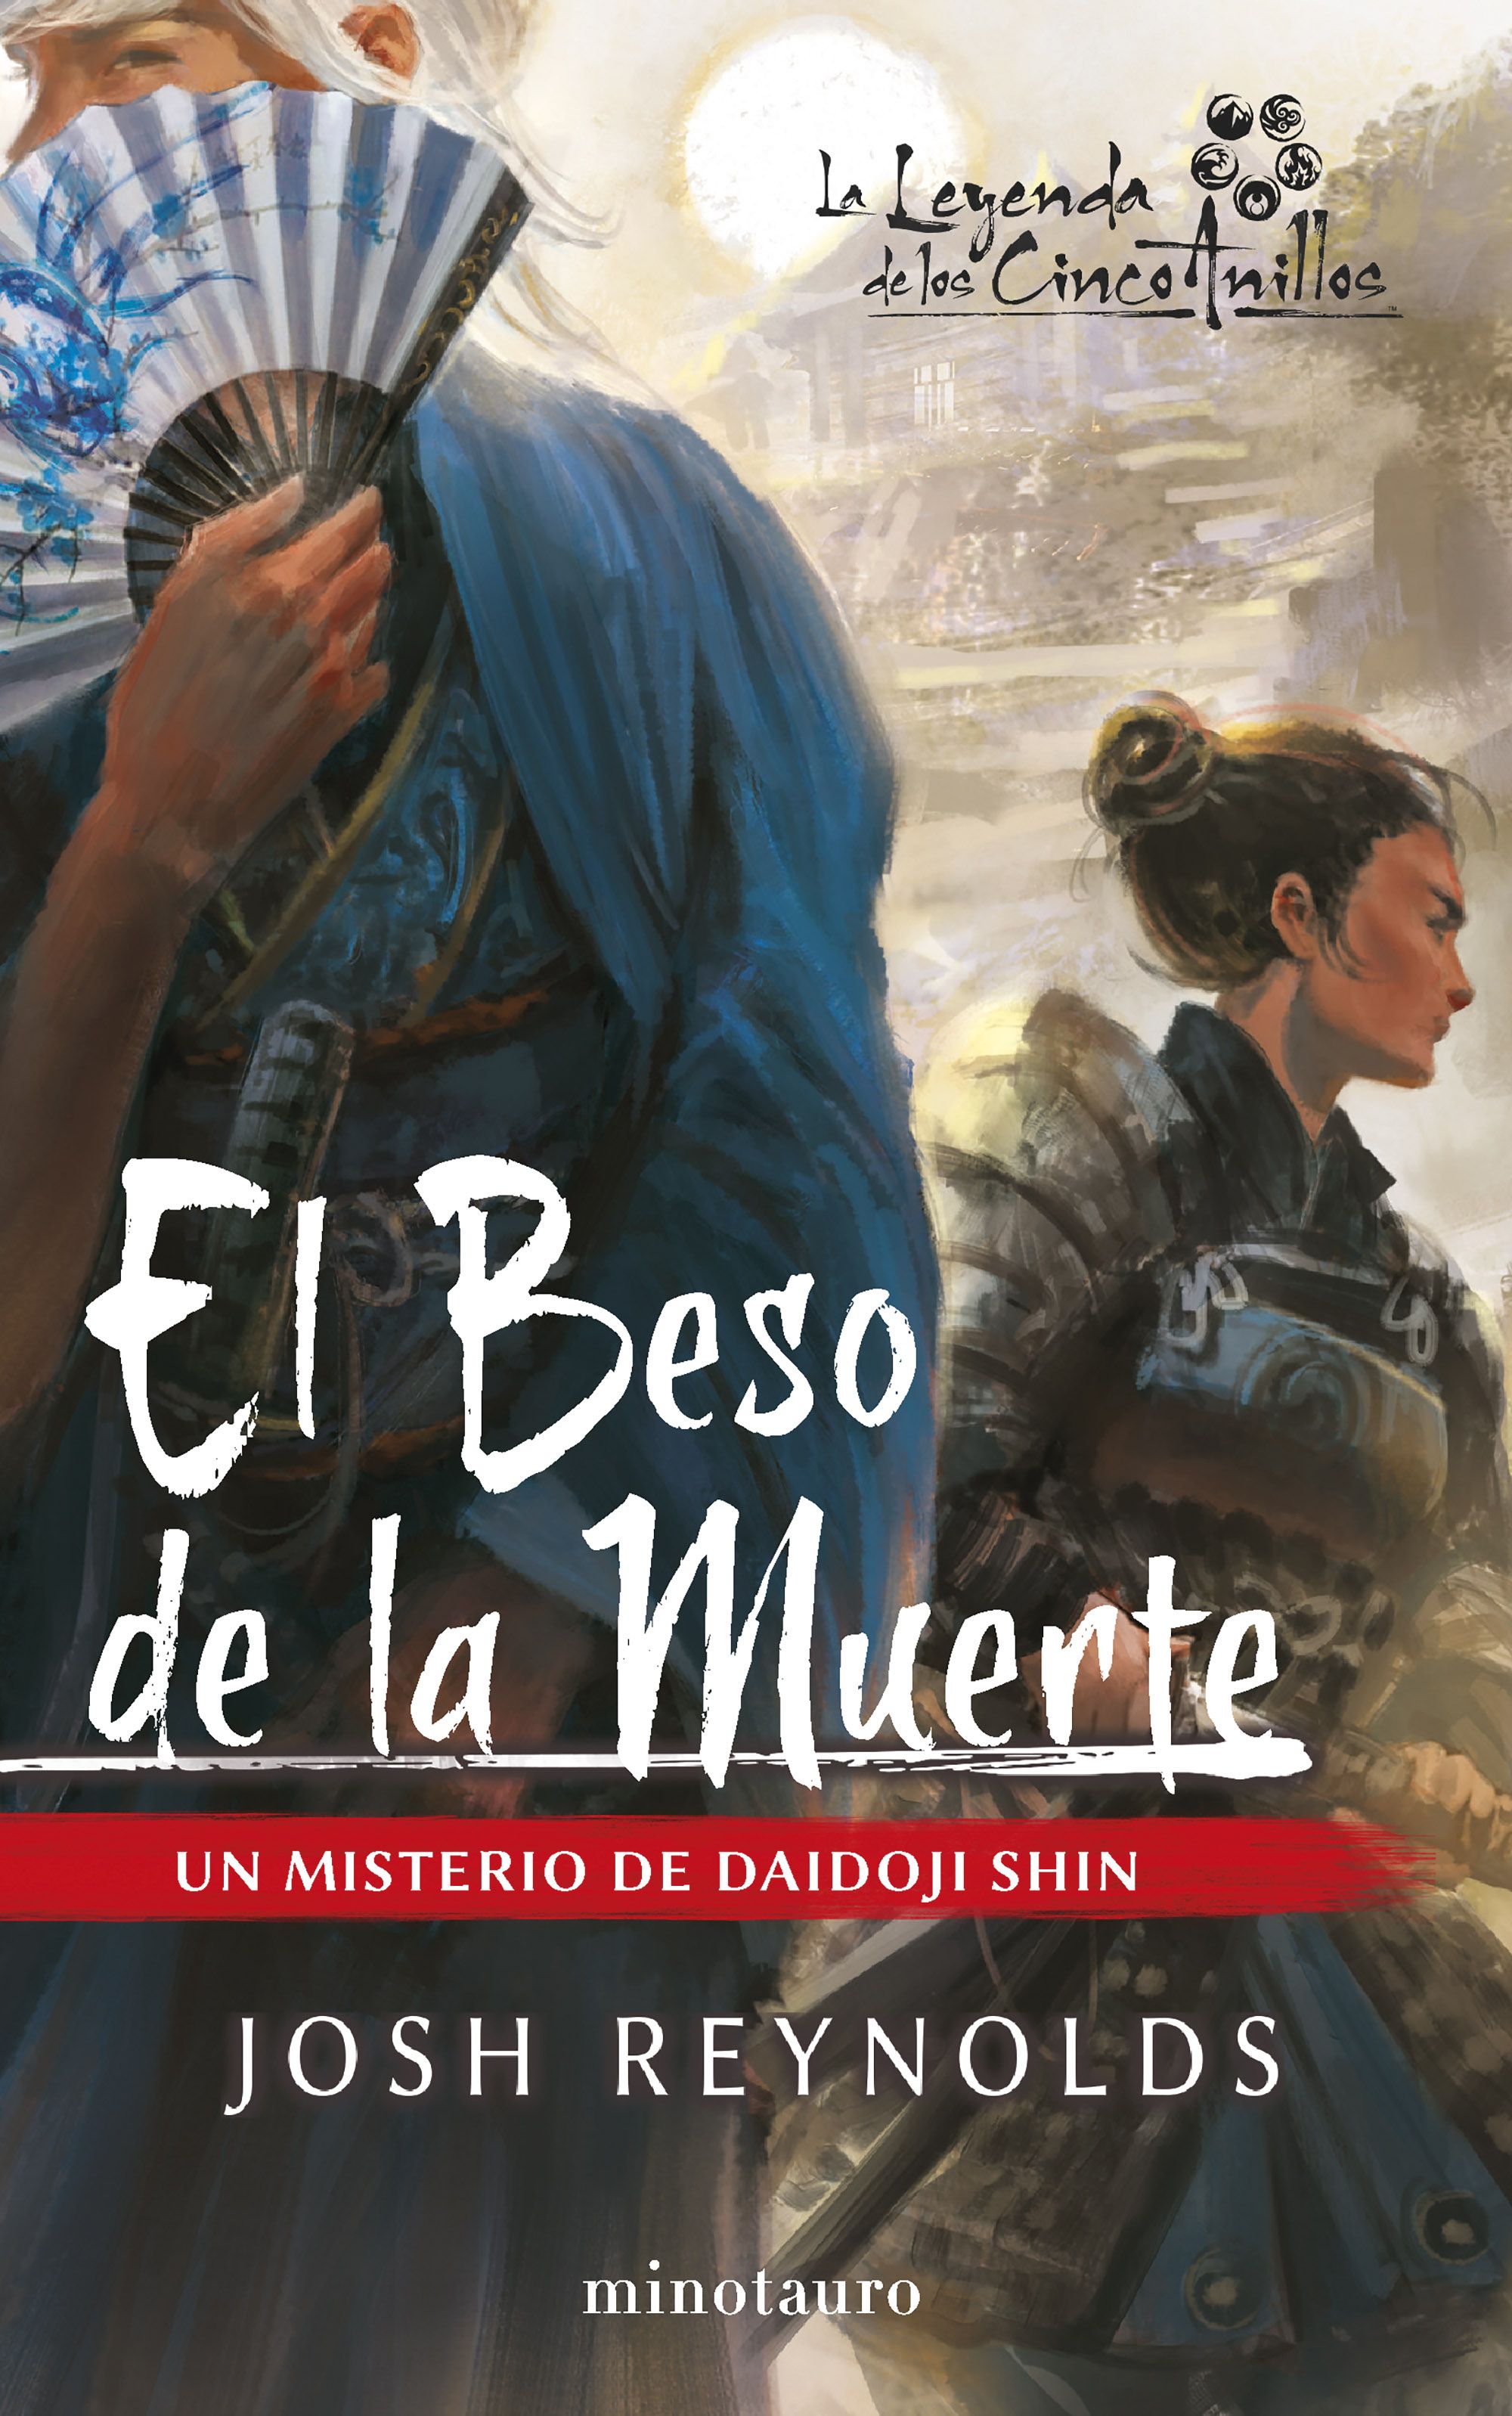 Josh Reynolds: El Beso de la Muerte (Paperback, Castellano language, Minotauro)